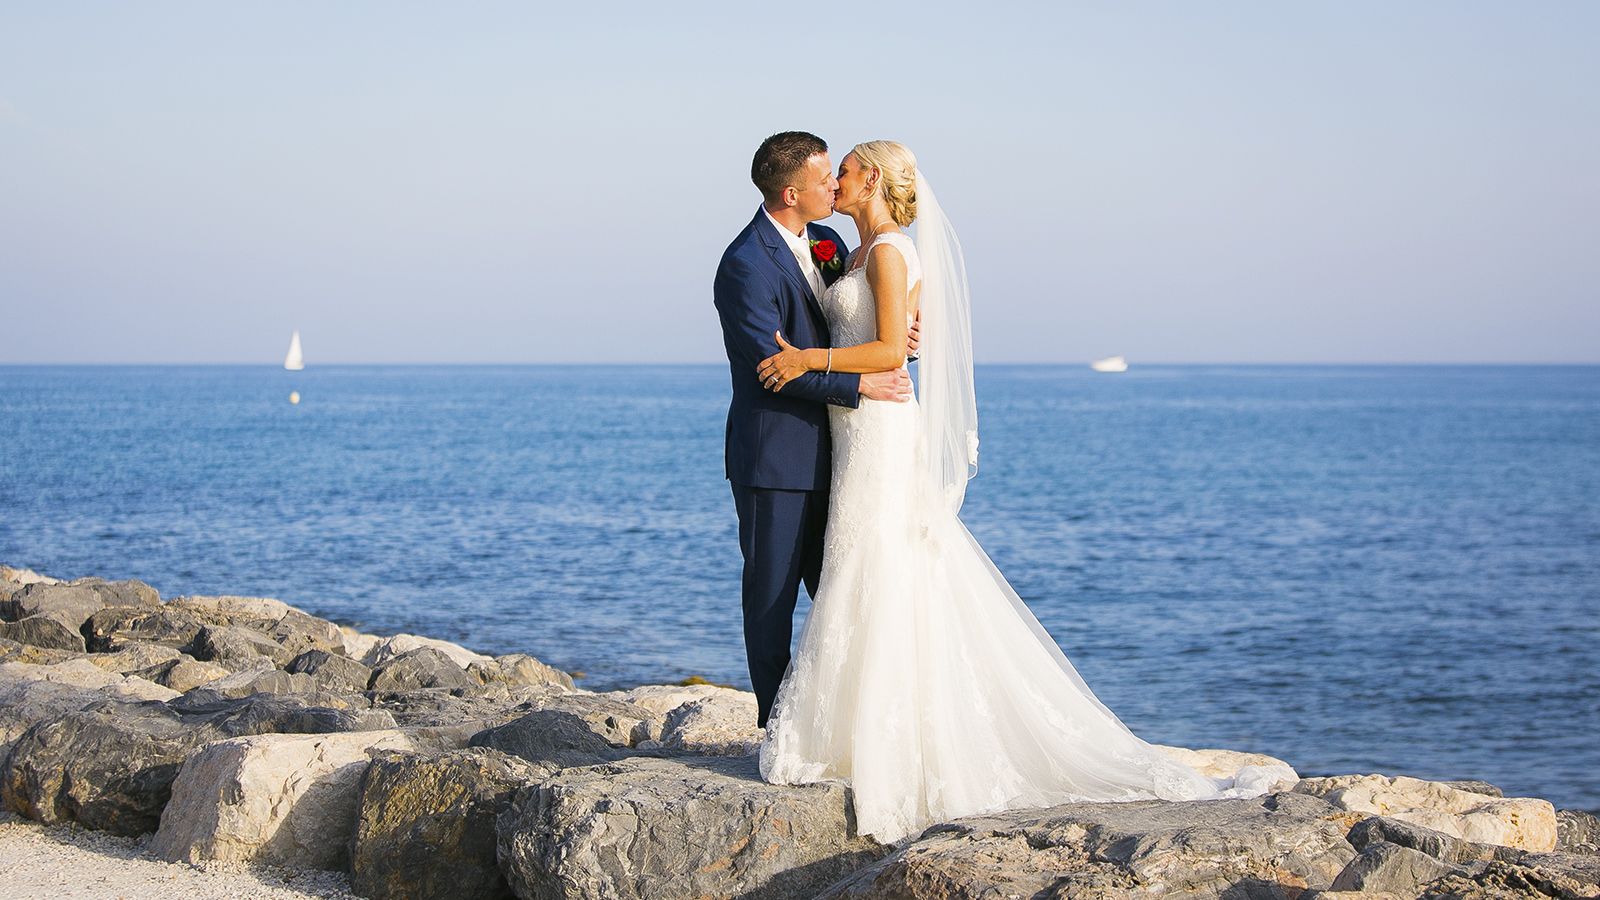 Weddings At Sunset Beach Club Fbd Hotels And Resorts